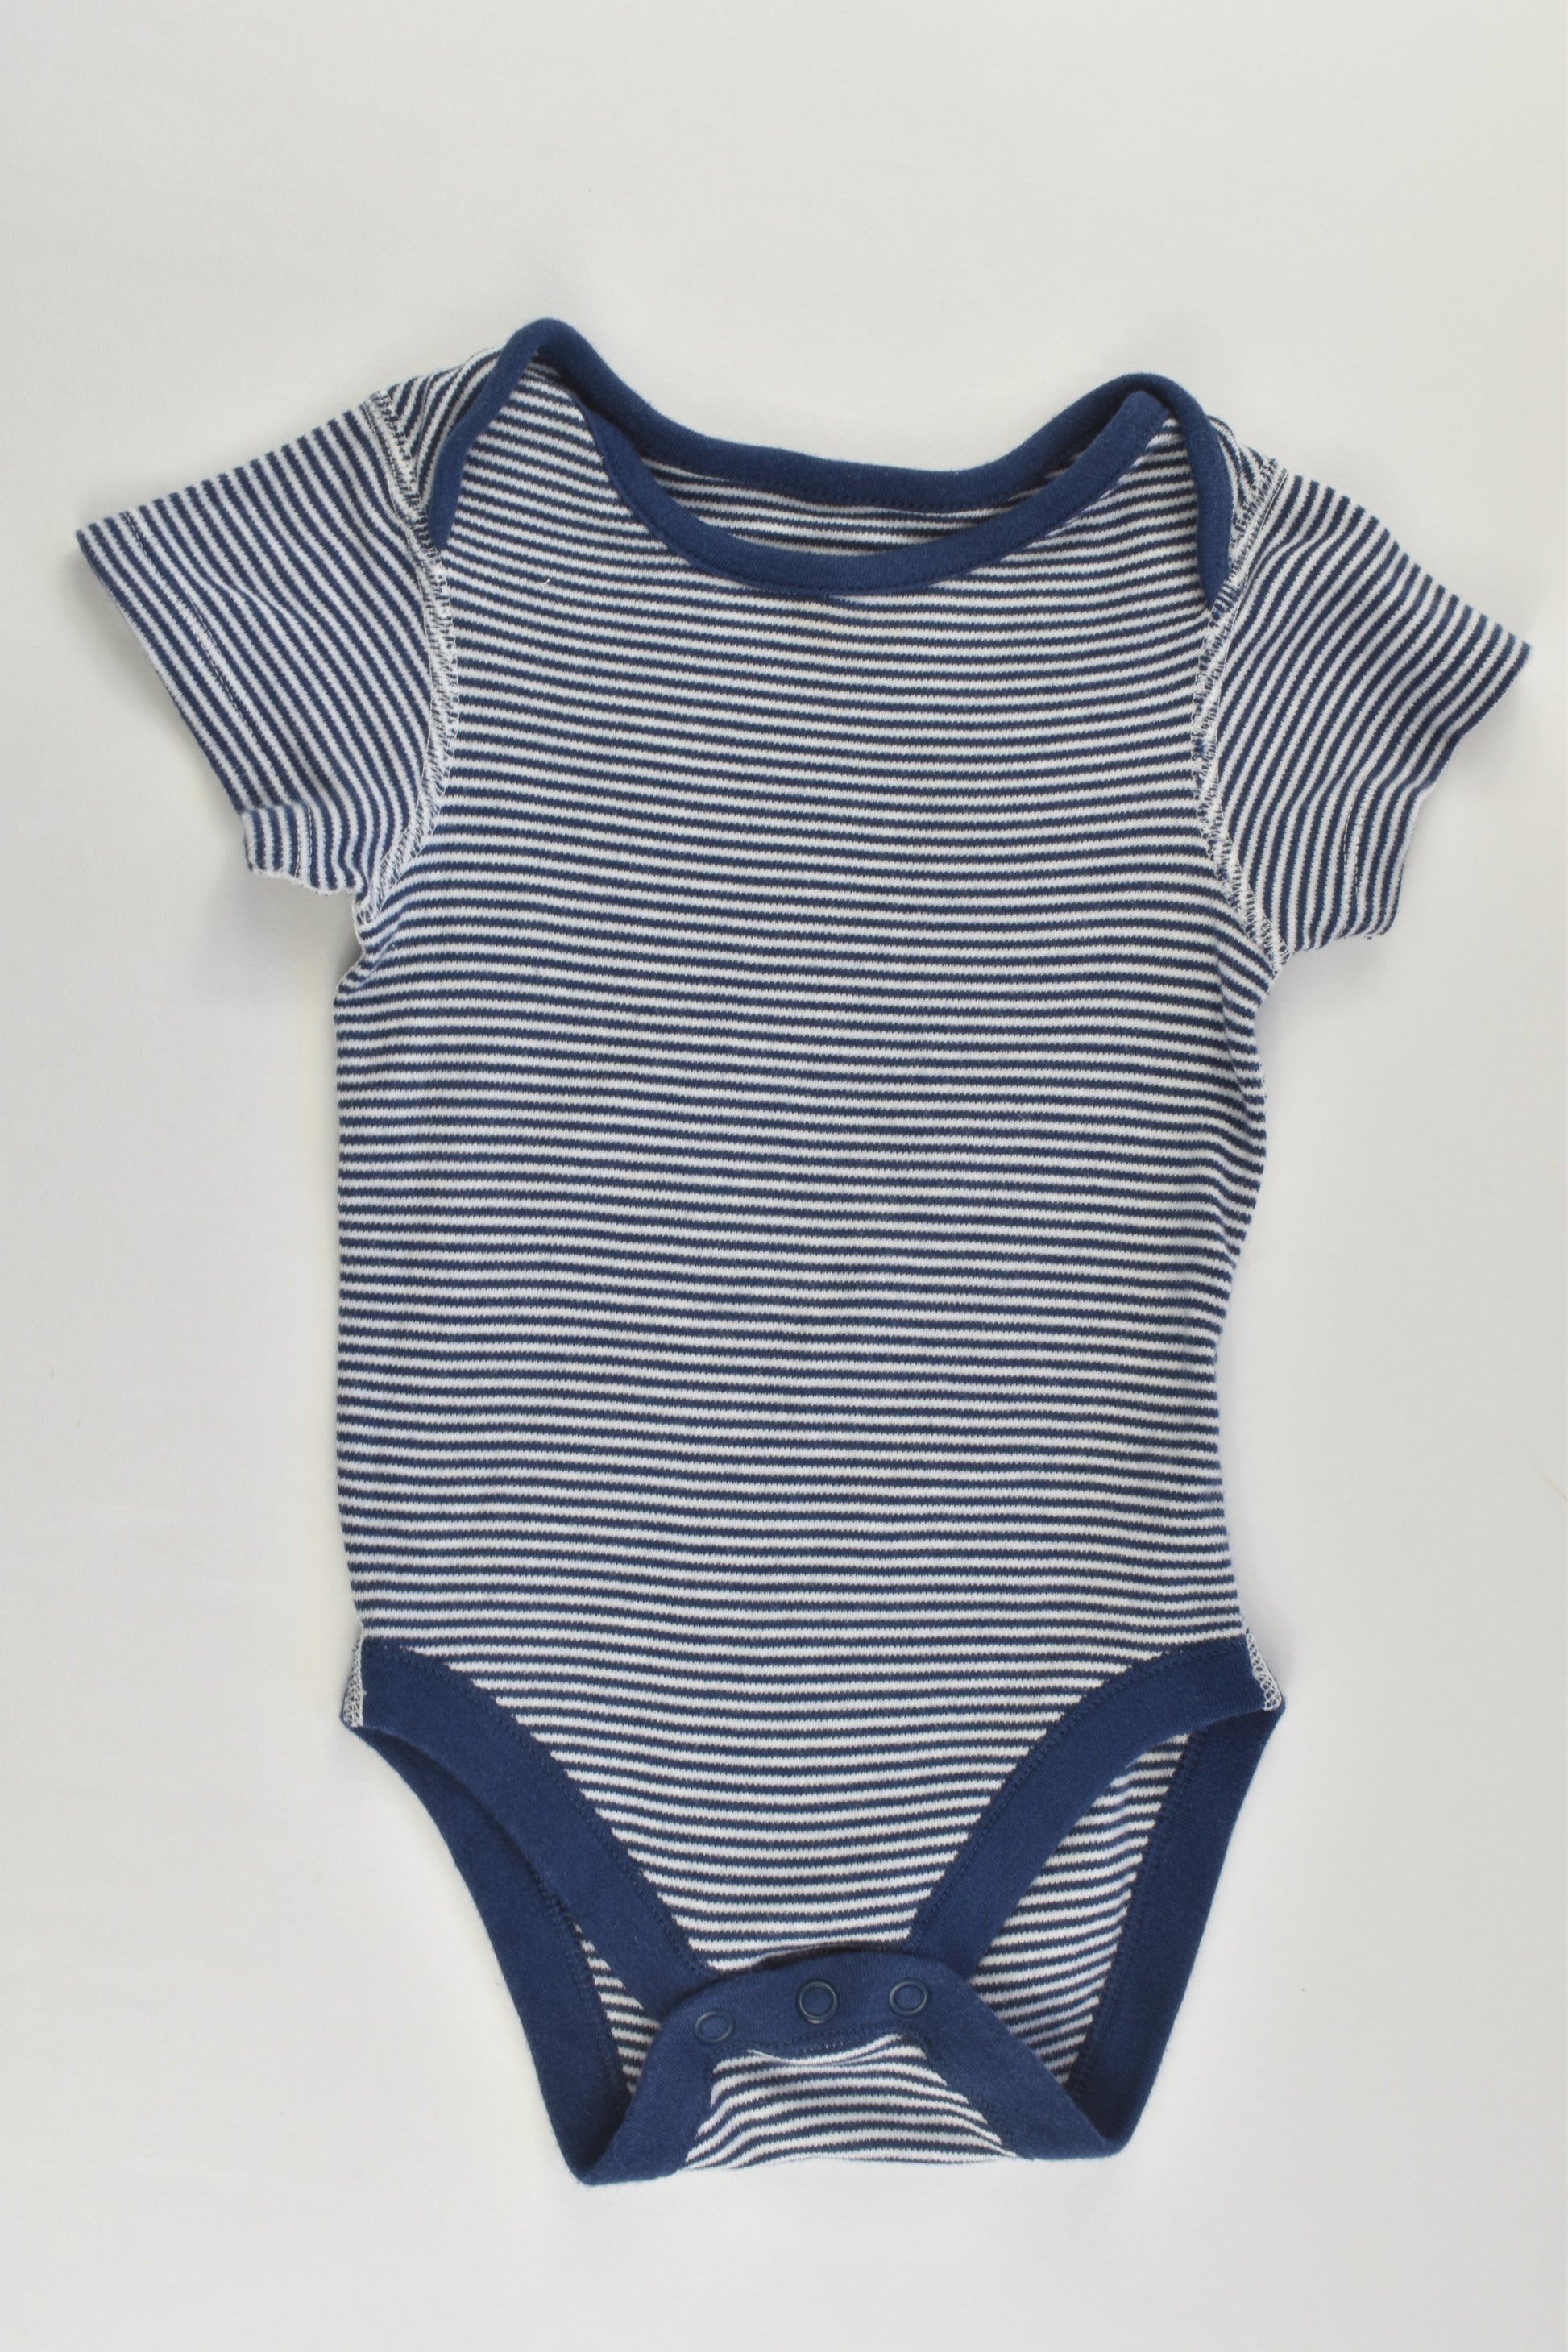 Marks & Spencer Size 0 (9-12 months) Striped/Blue Bodysuit